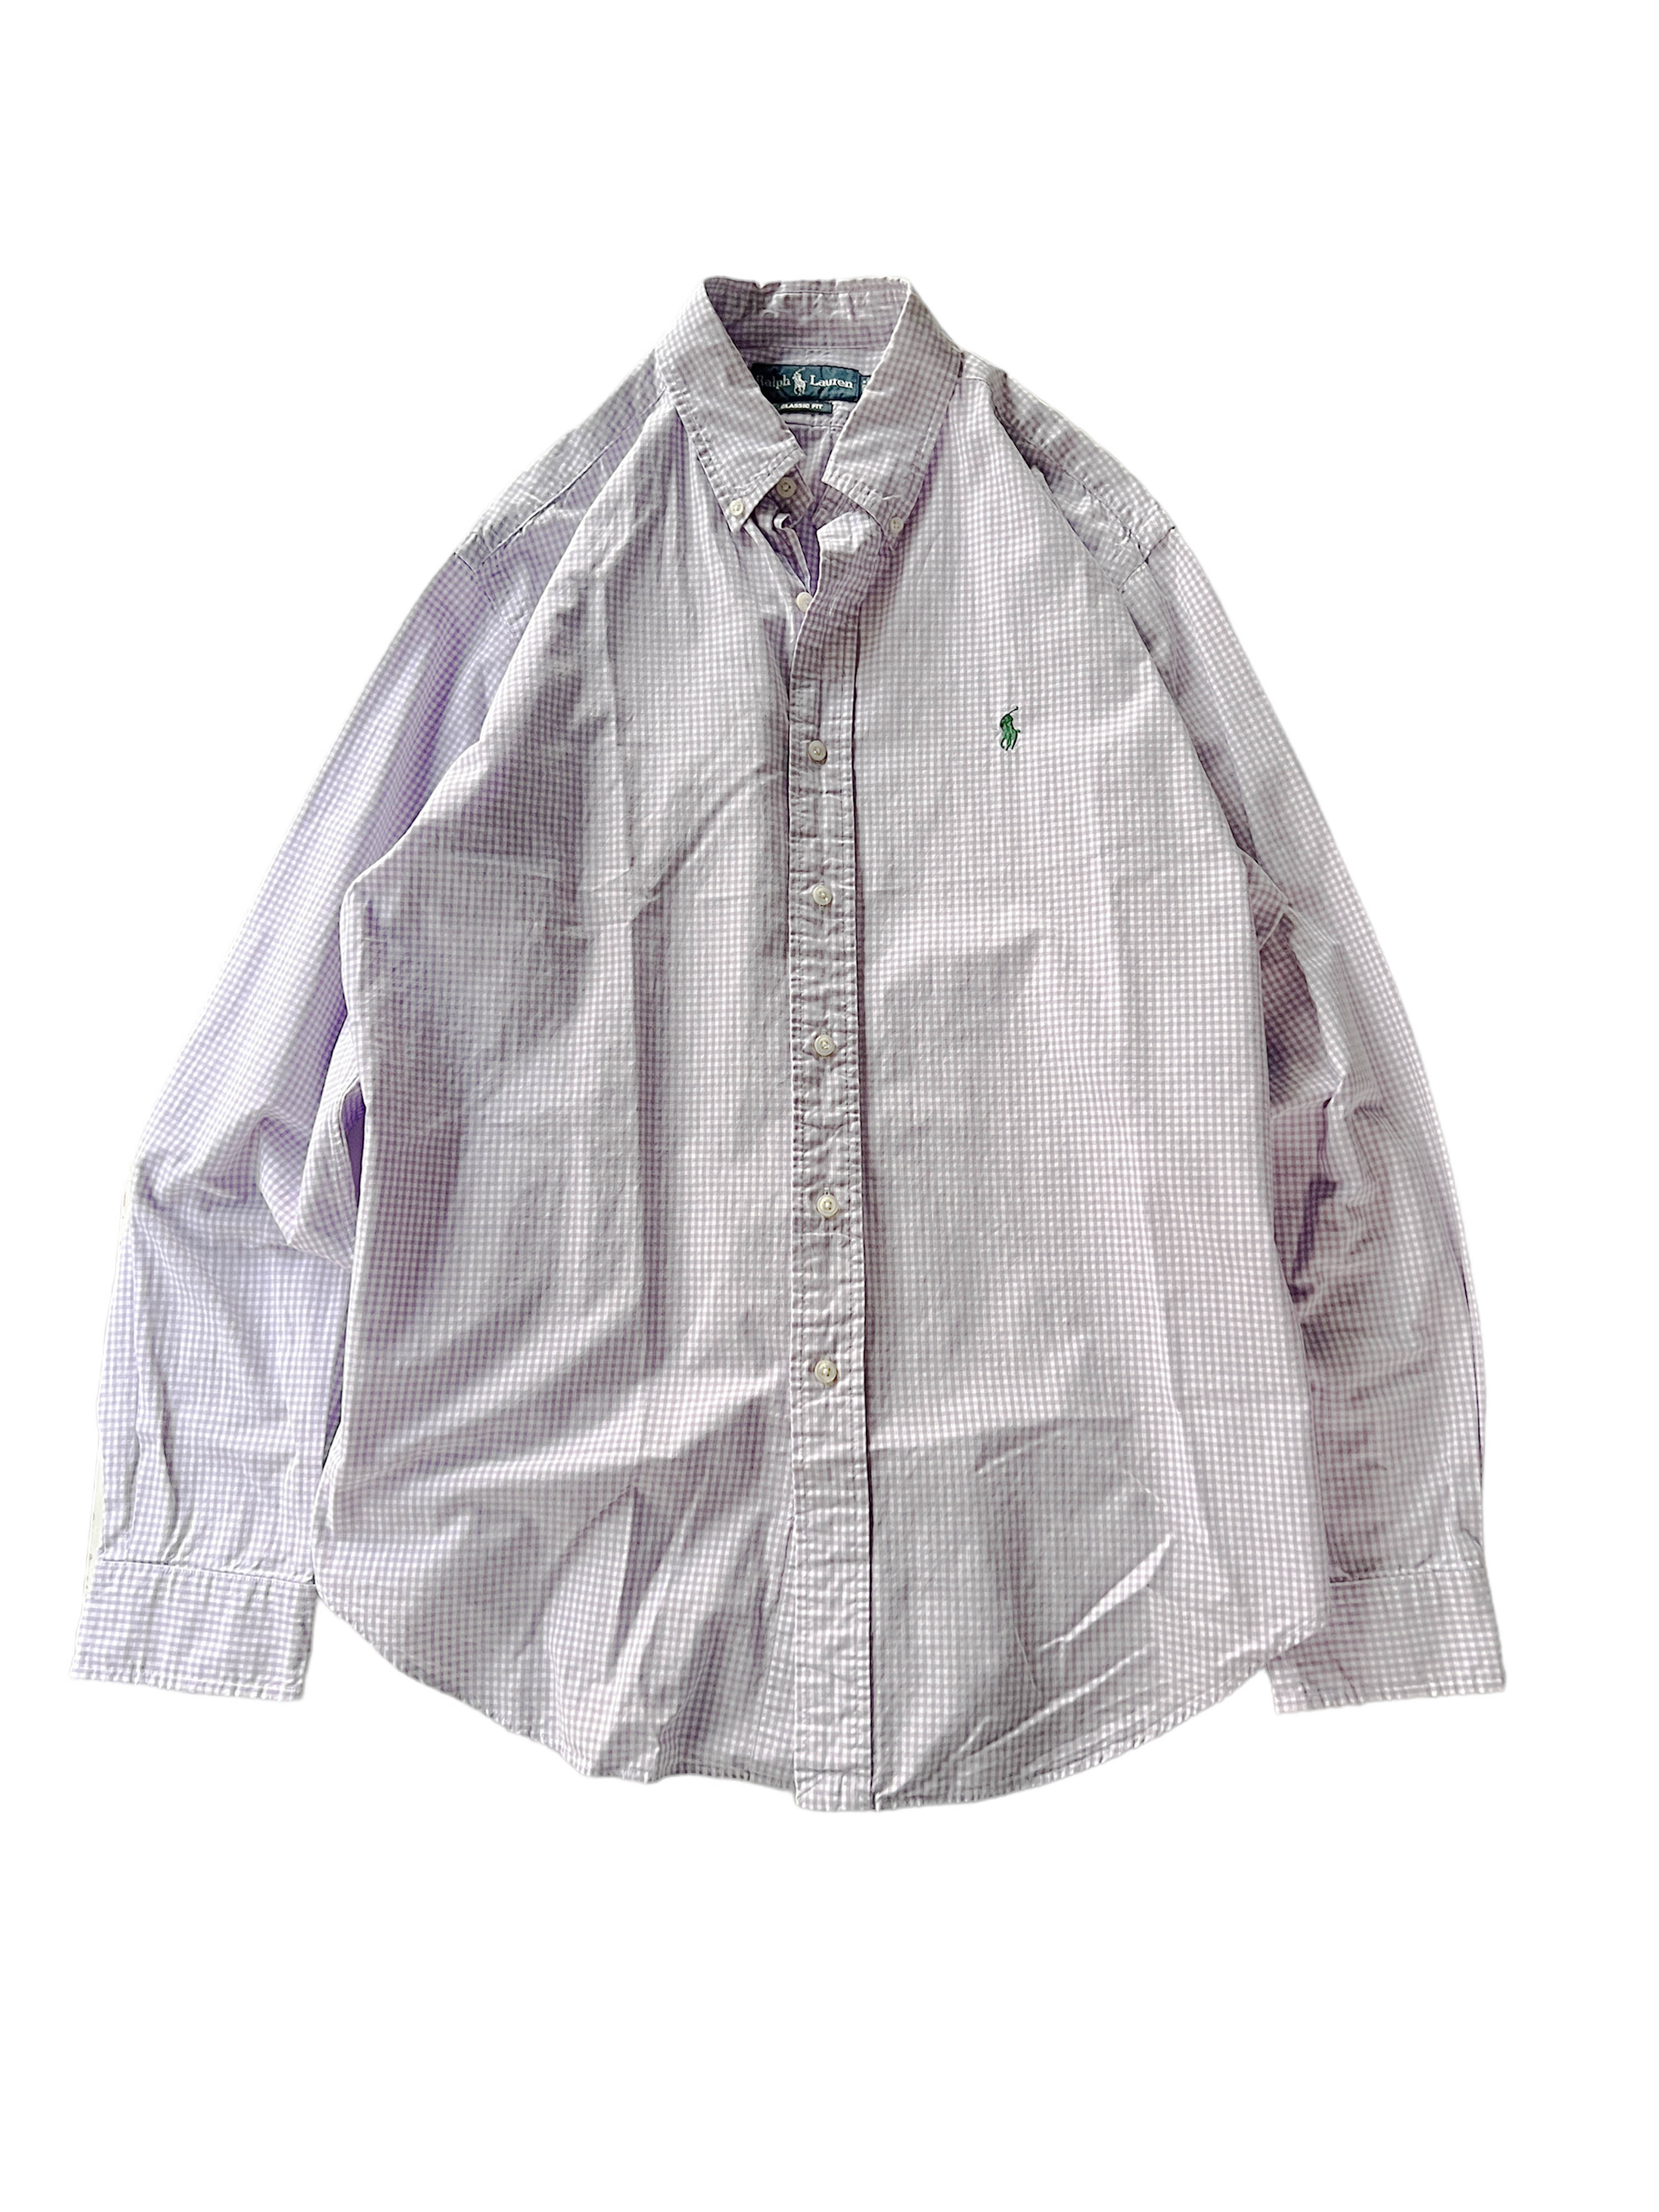 Polo ralph lauren purple check shirts